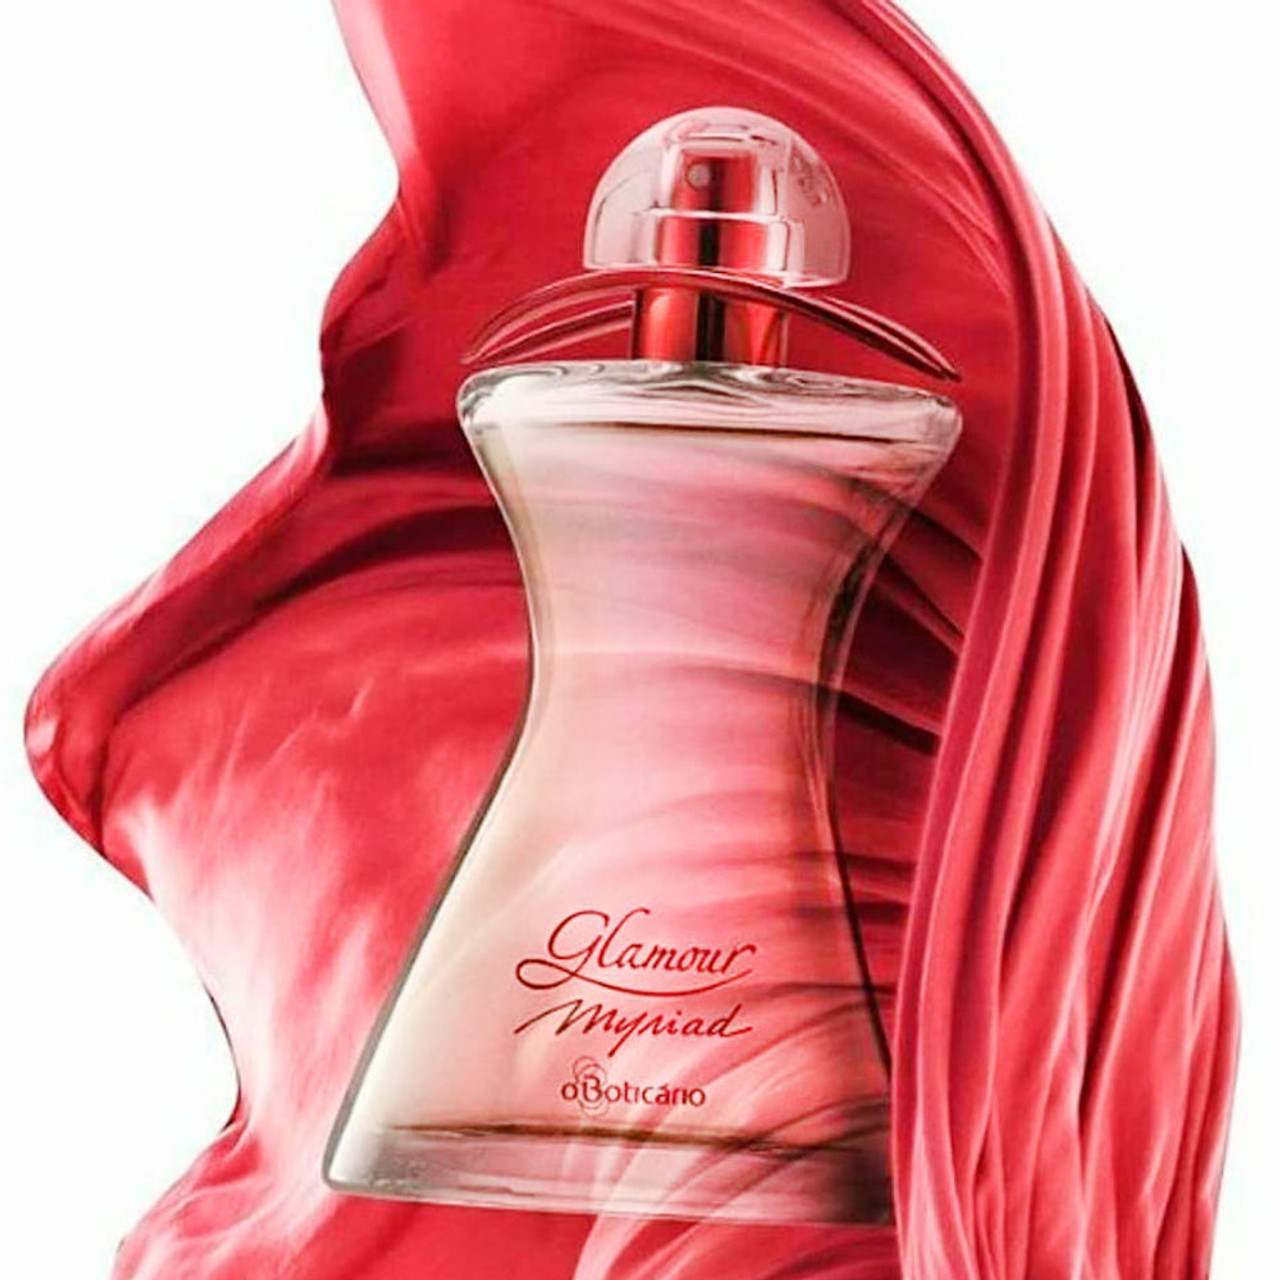 Glamour Boticário  Perfume, Body care, Fragrance